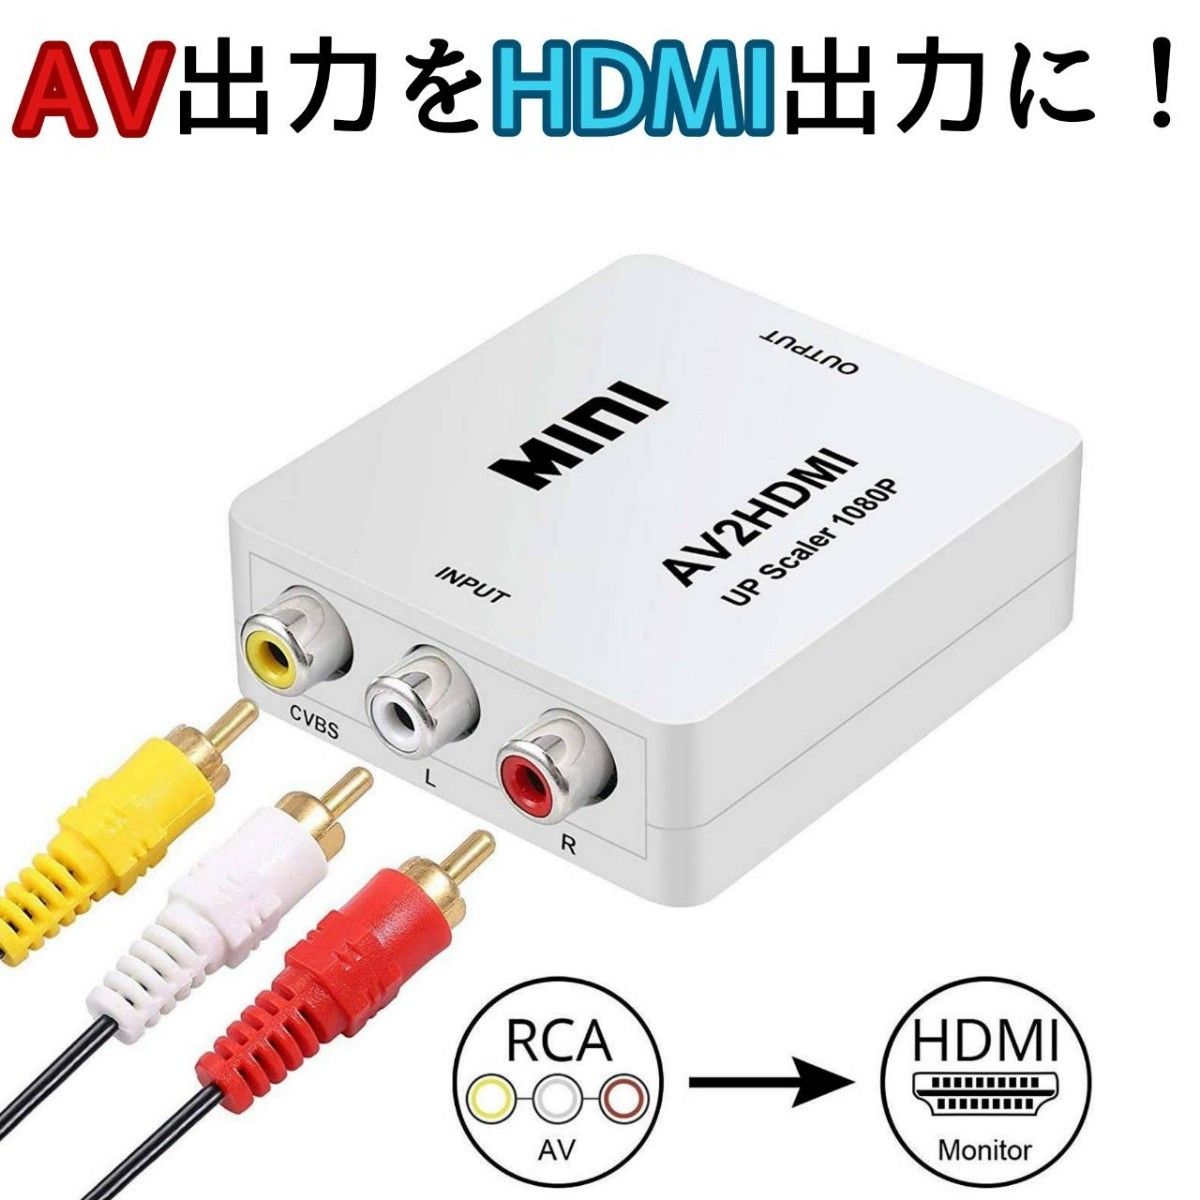 AV to HDMI 変換 アダプタ RCA コンポジット 3本線 Wii PSスーファミ 64